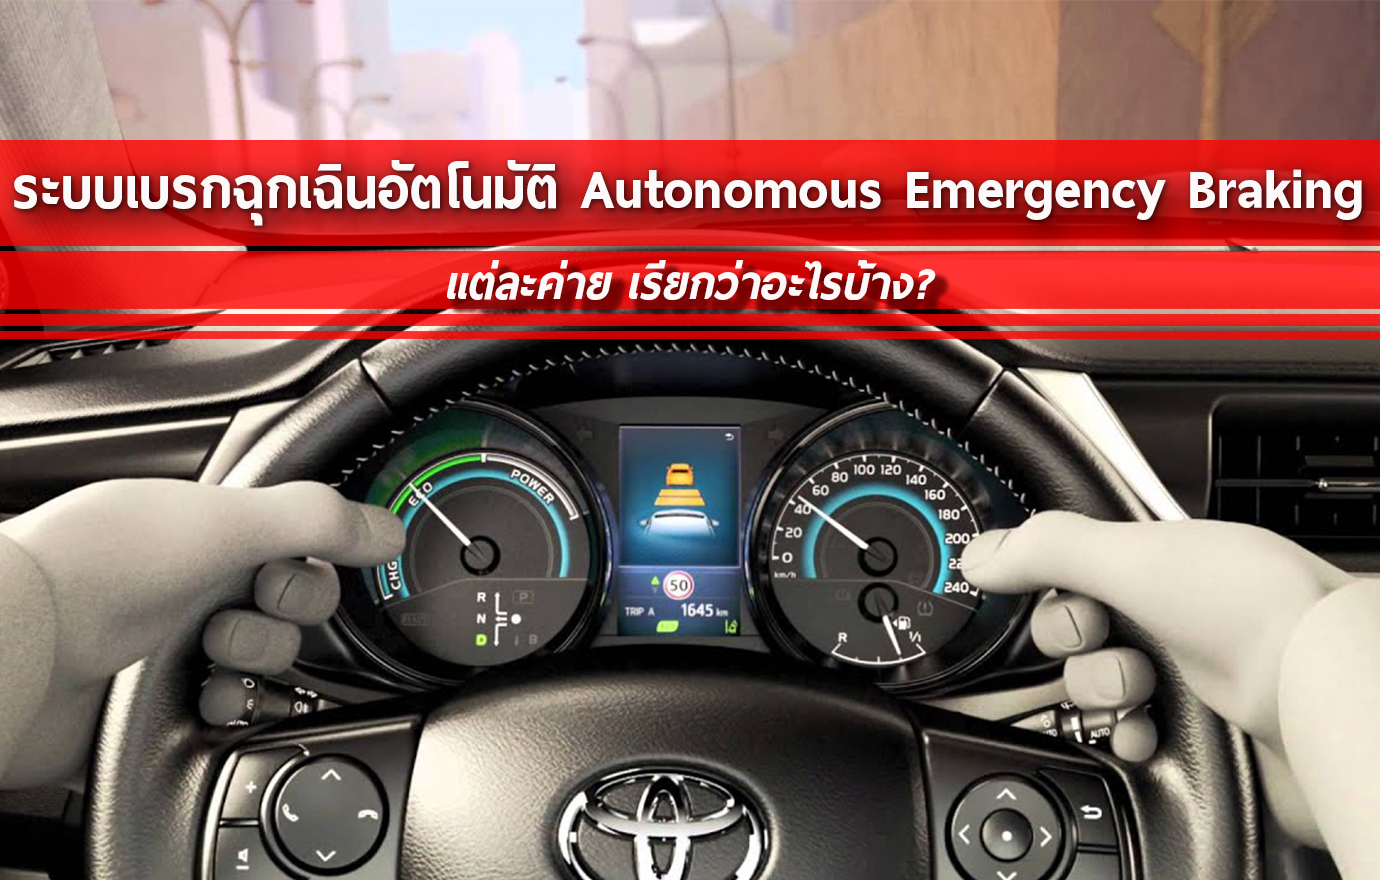 Autonomous Emergency Braking